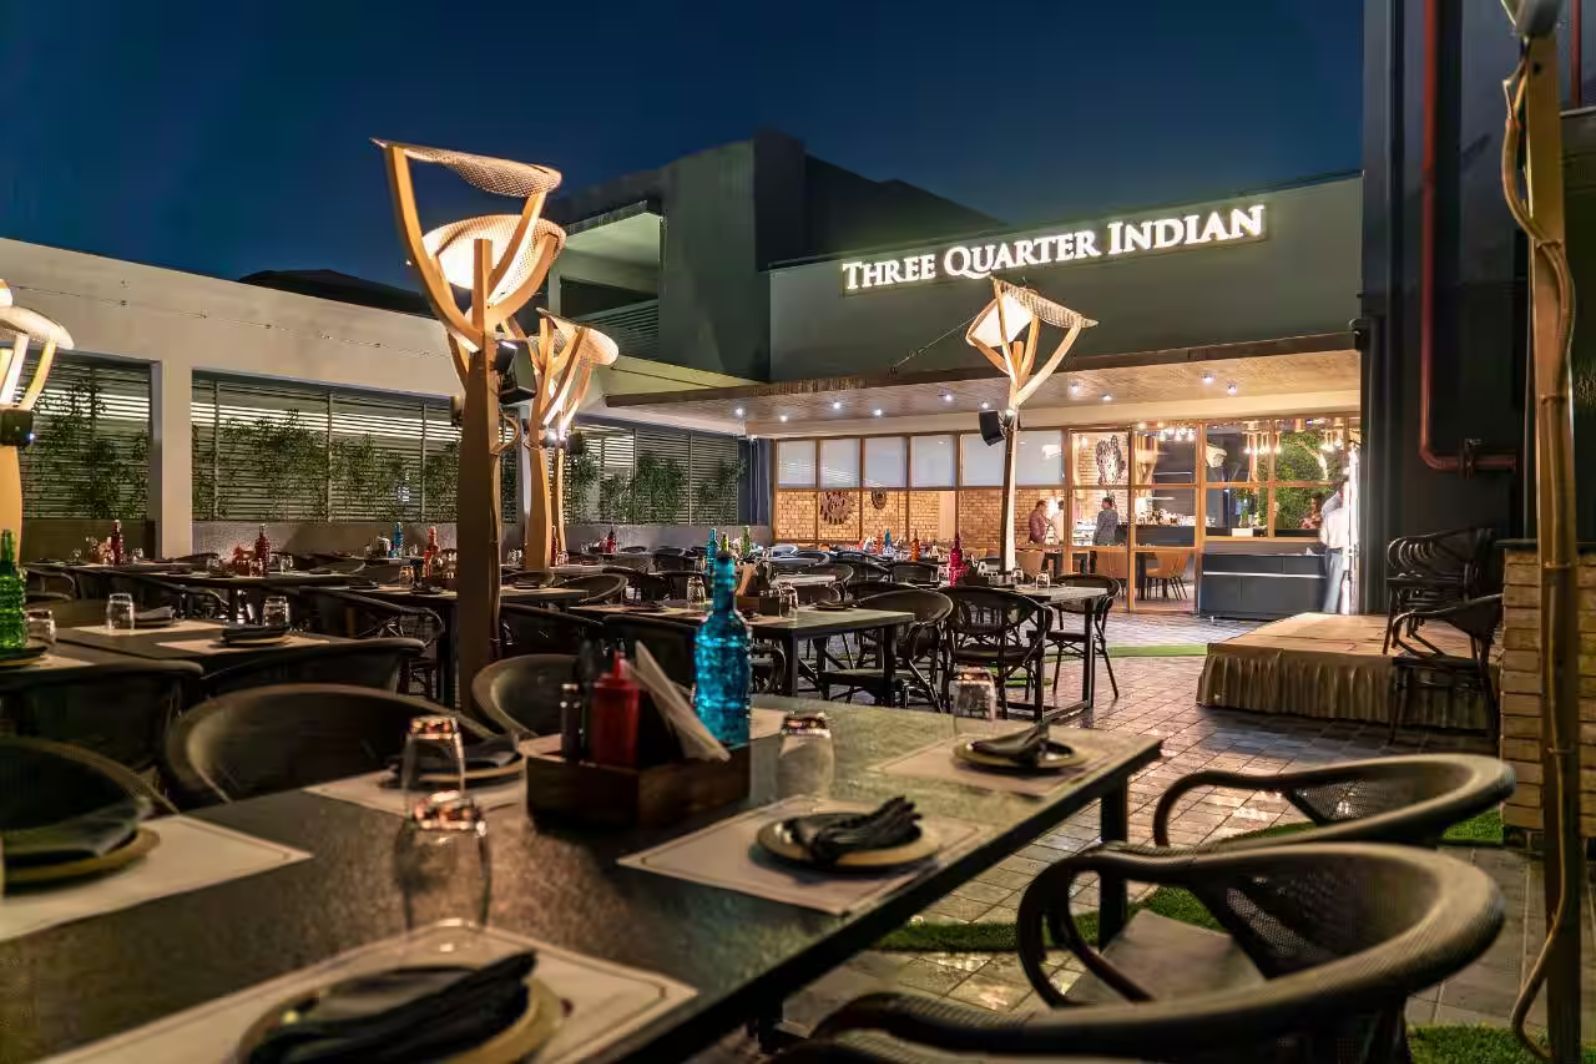 3 quarter indian restaurant ahmedabad